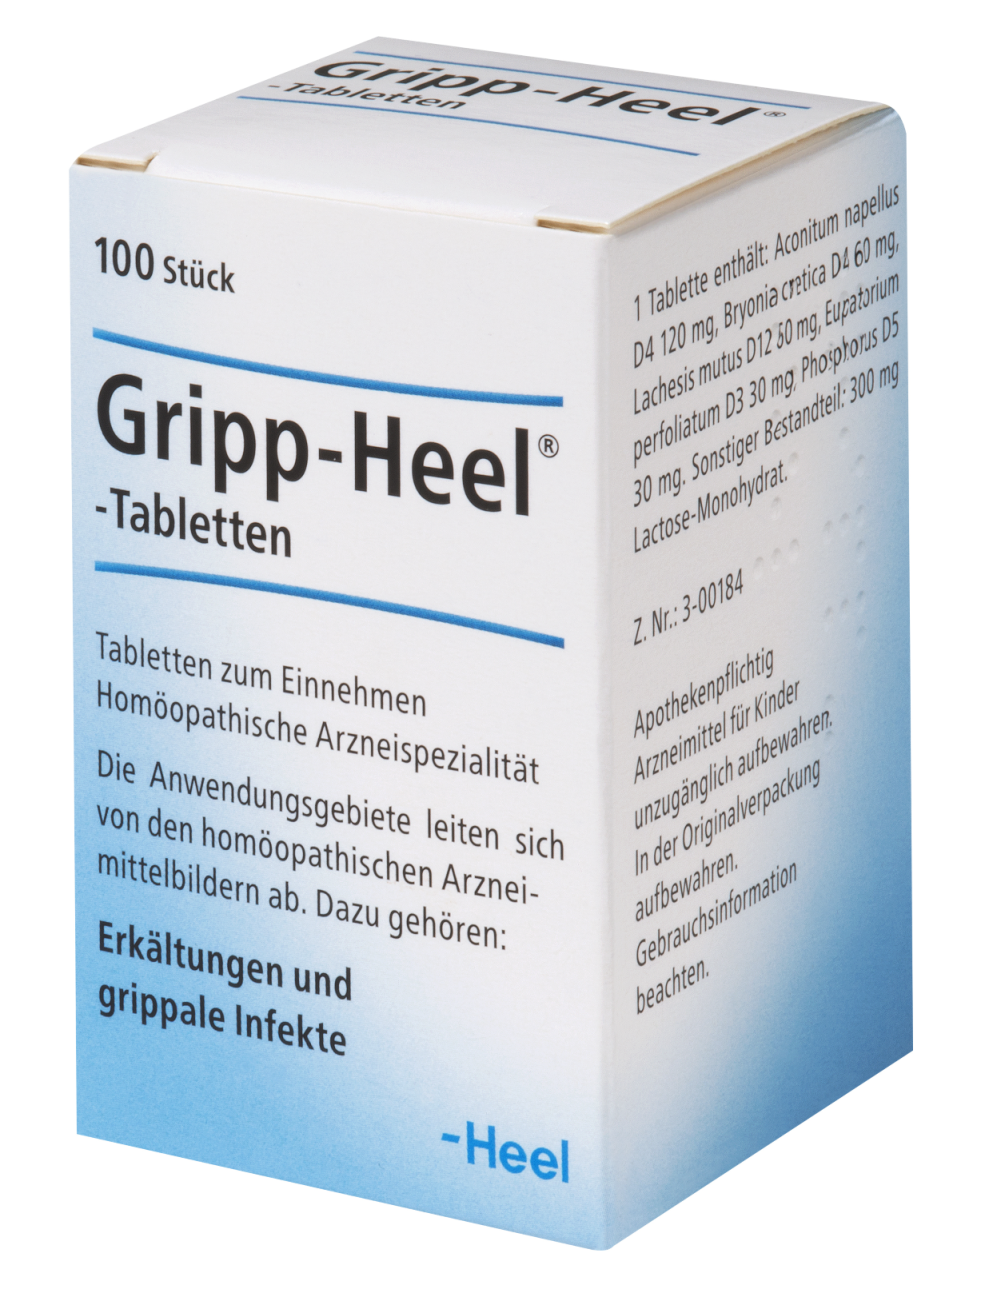 Abbildung Gripp-Heel-Tabletten